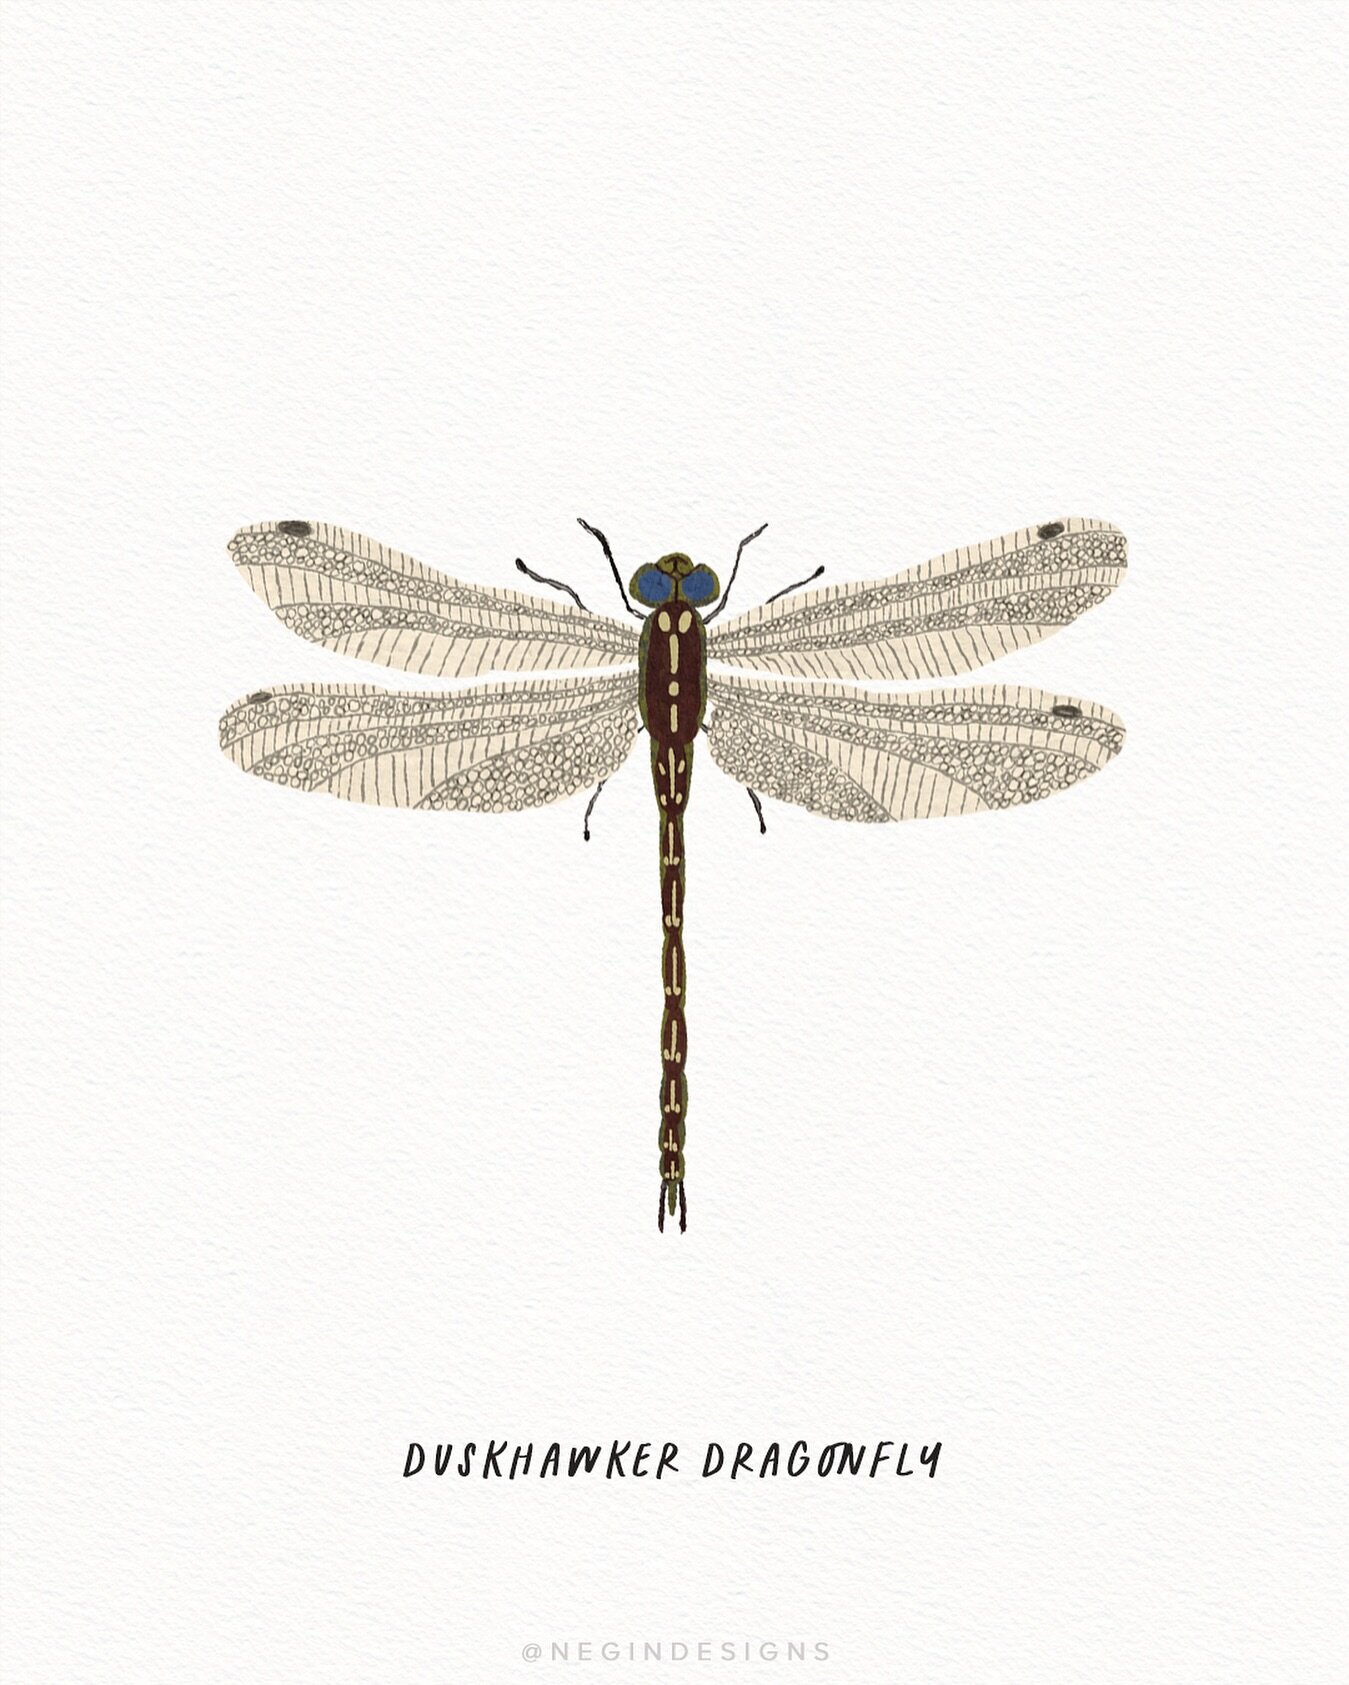 I love dragonflies; they remind me of miniature helicopters 🚁
.
#digitalillustration #procreate #australianwildlife #australianbirds #sketchbook #sketchdaily #botanicalpickmeup #calledtobecreative #makersmovement #botanical #watercolor #australianar